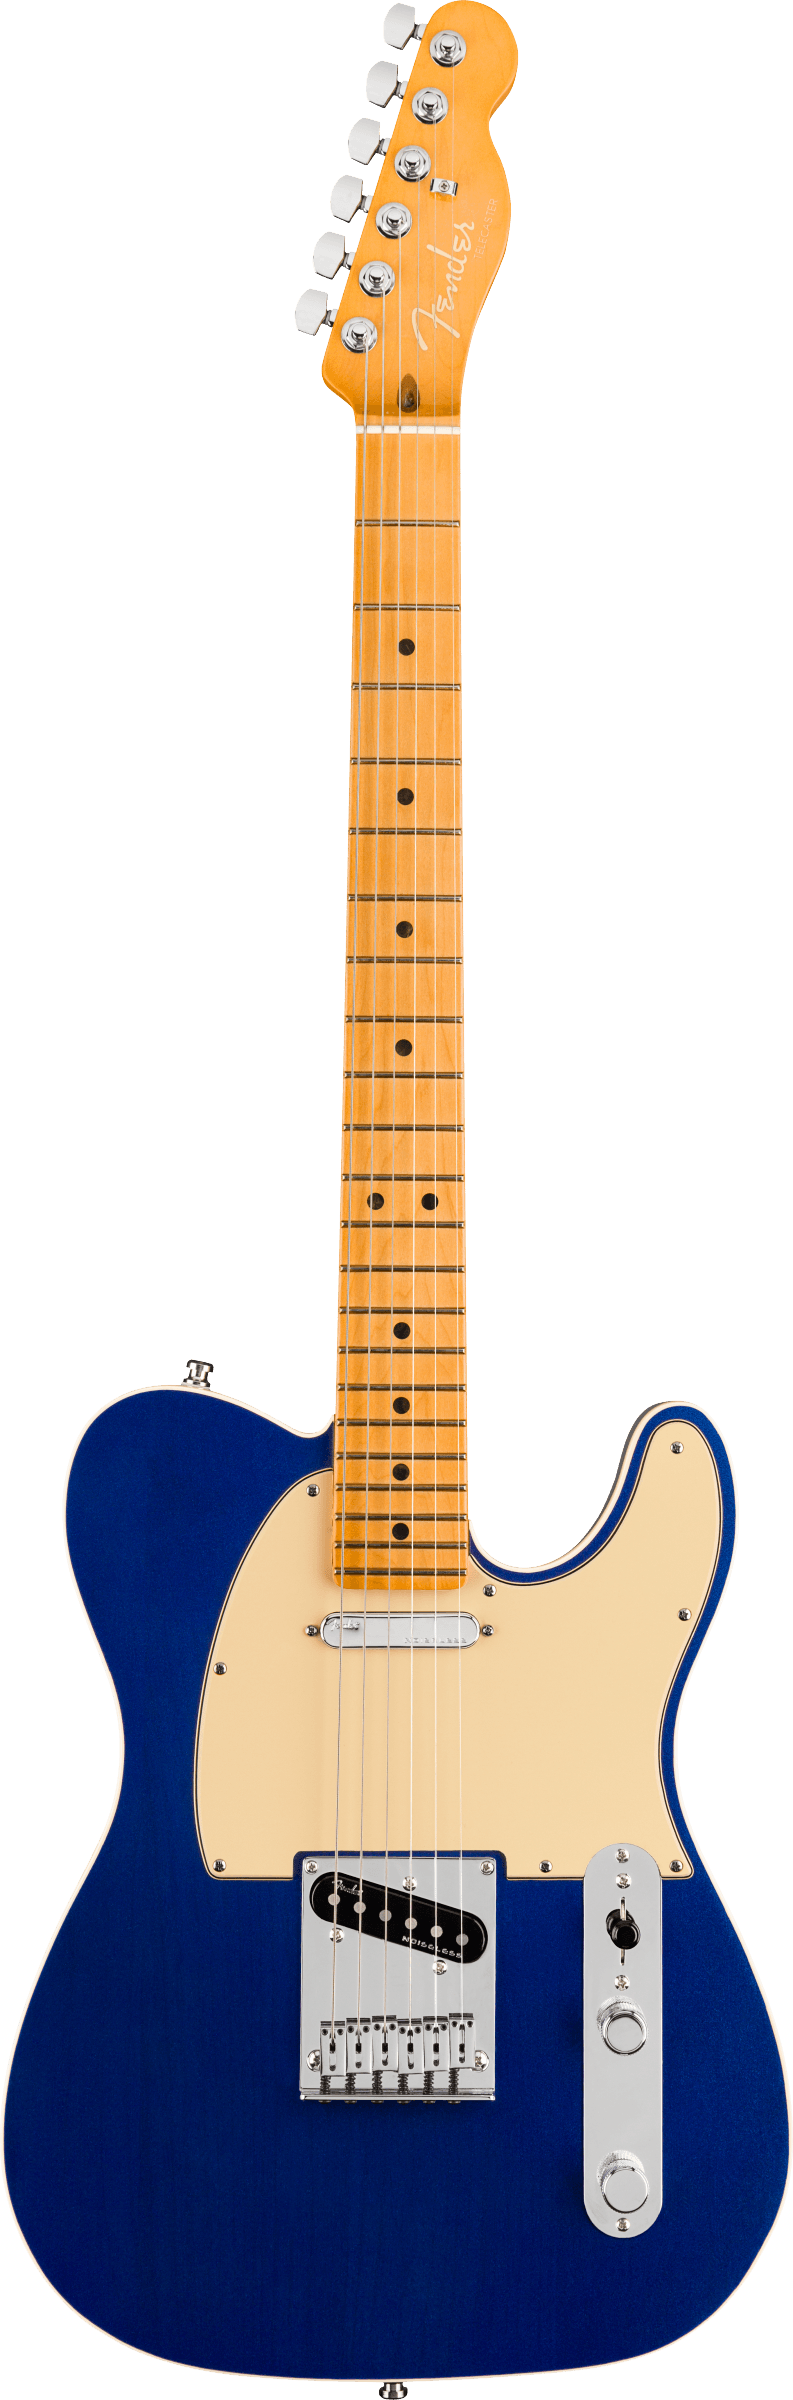 Fender Telecaster MP electric guitar in Cobra Blue Tone Shop Guitars Dallas TX